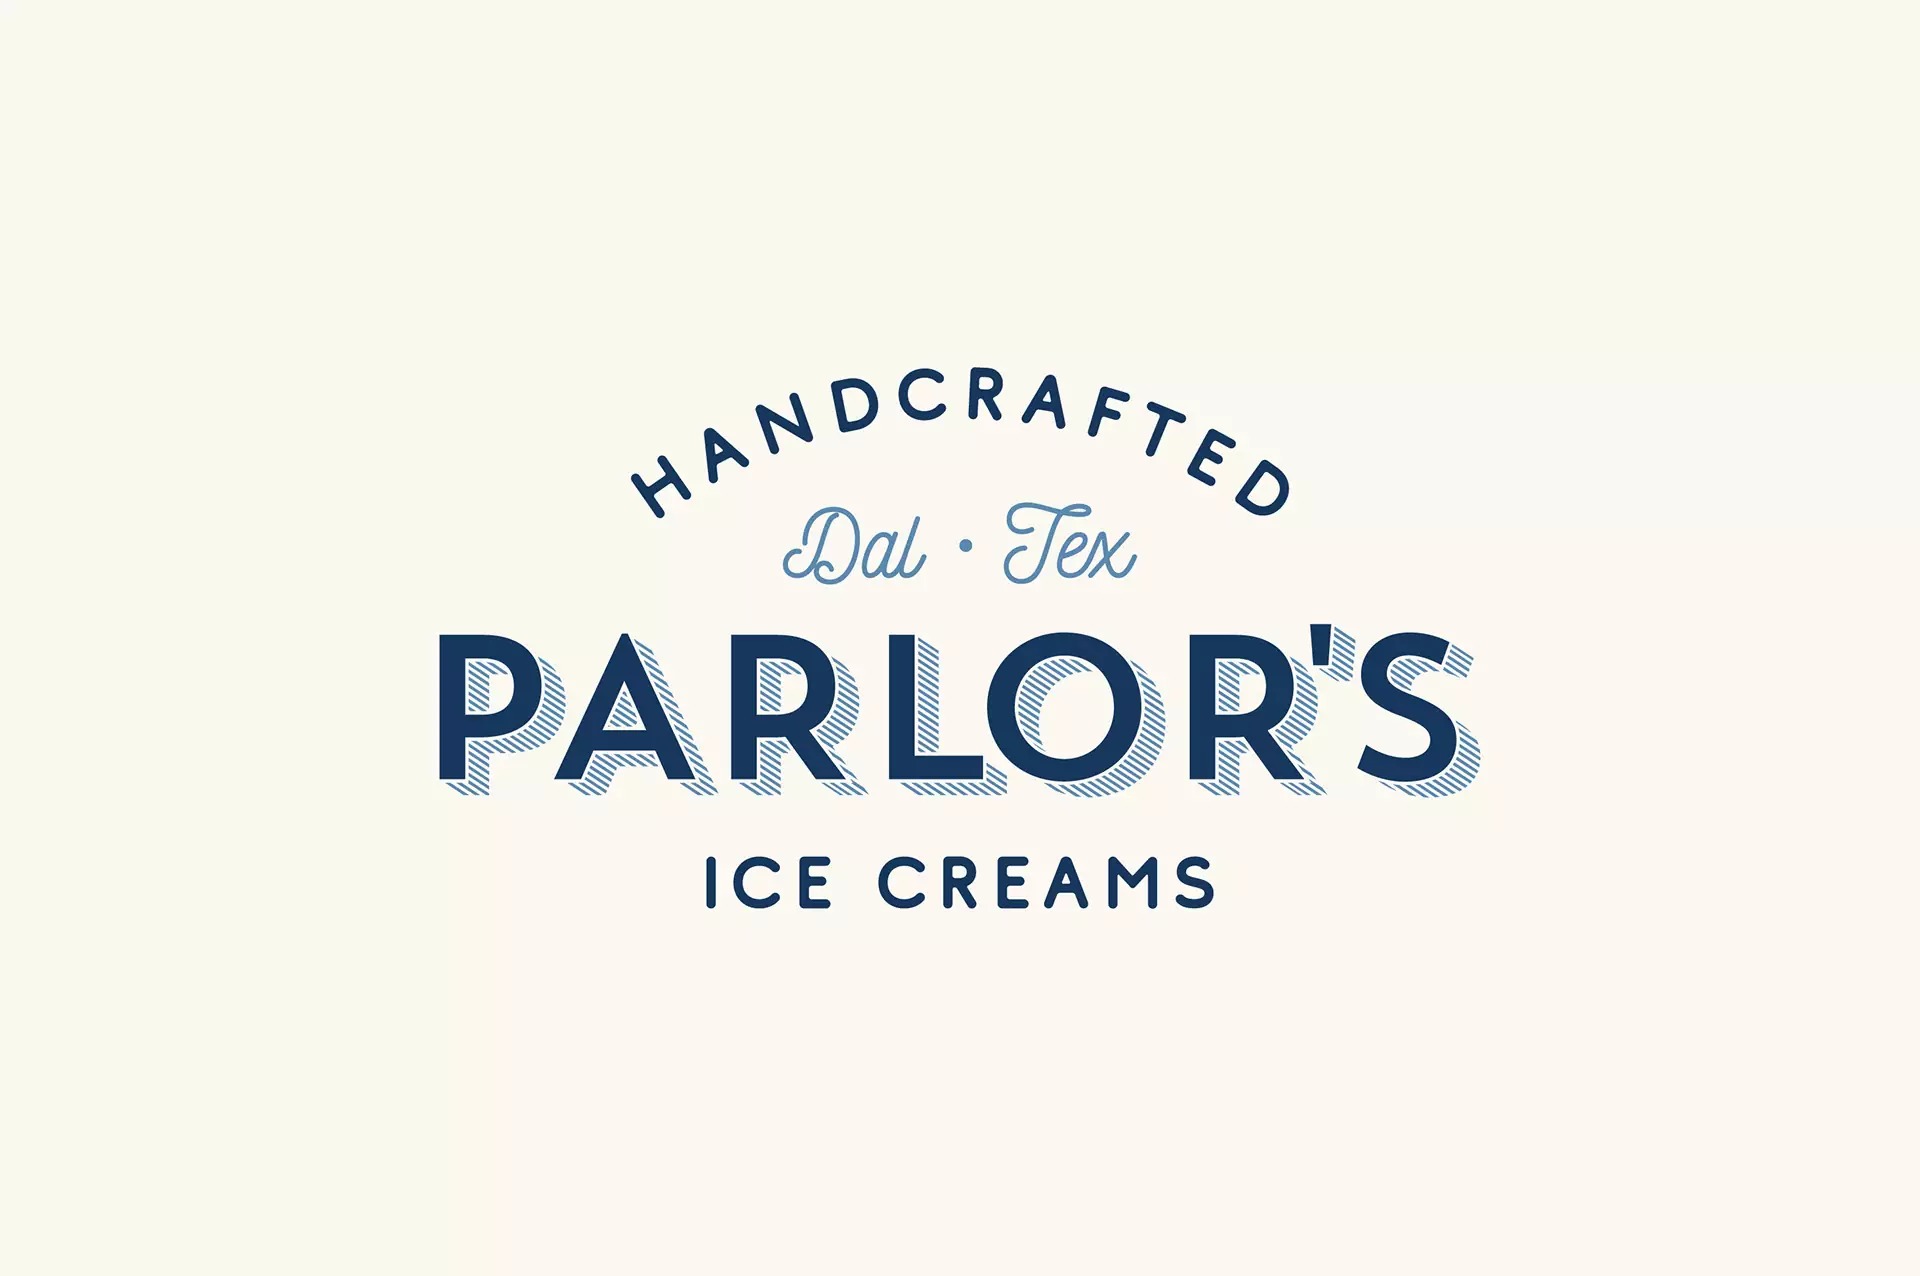 欣赏Parlor’s Ice Creams冰淇淋品牌形象设计作品 VI设计